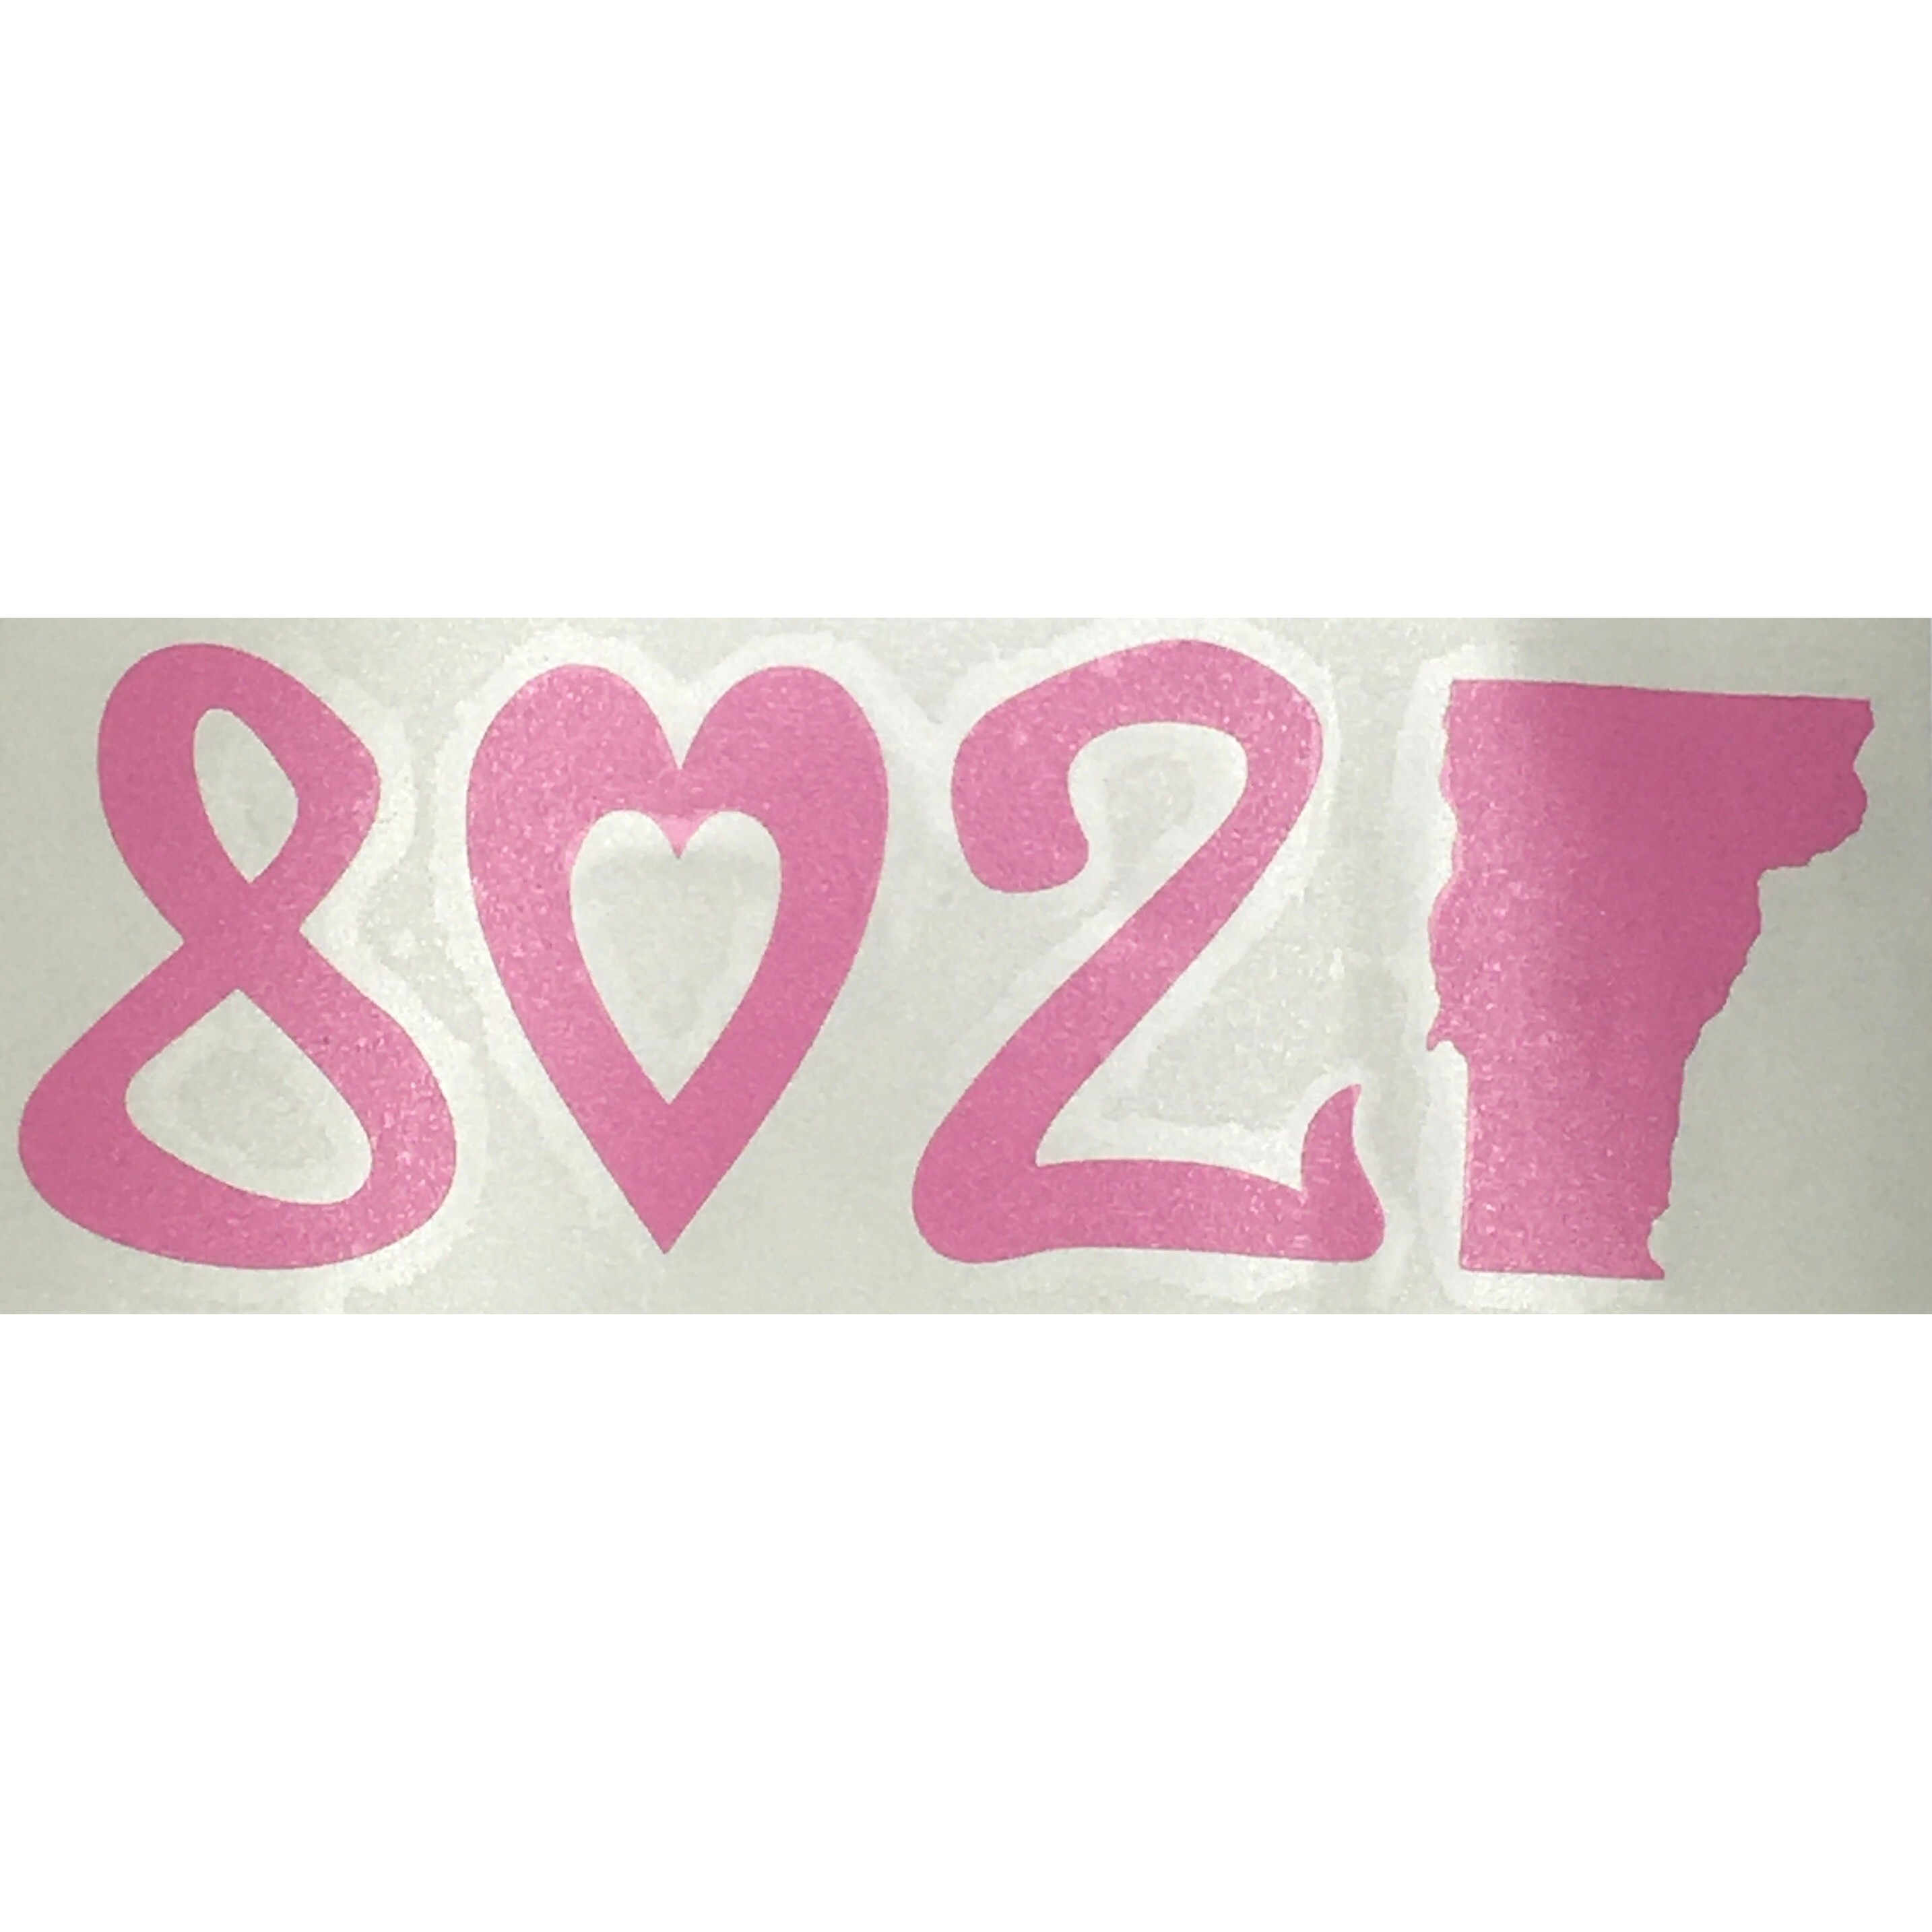 802 802 Classic Heart Sticker (Pink)